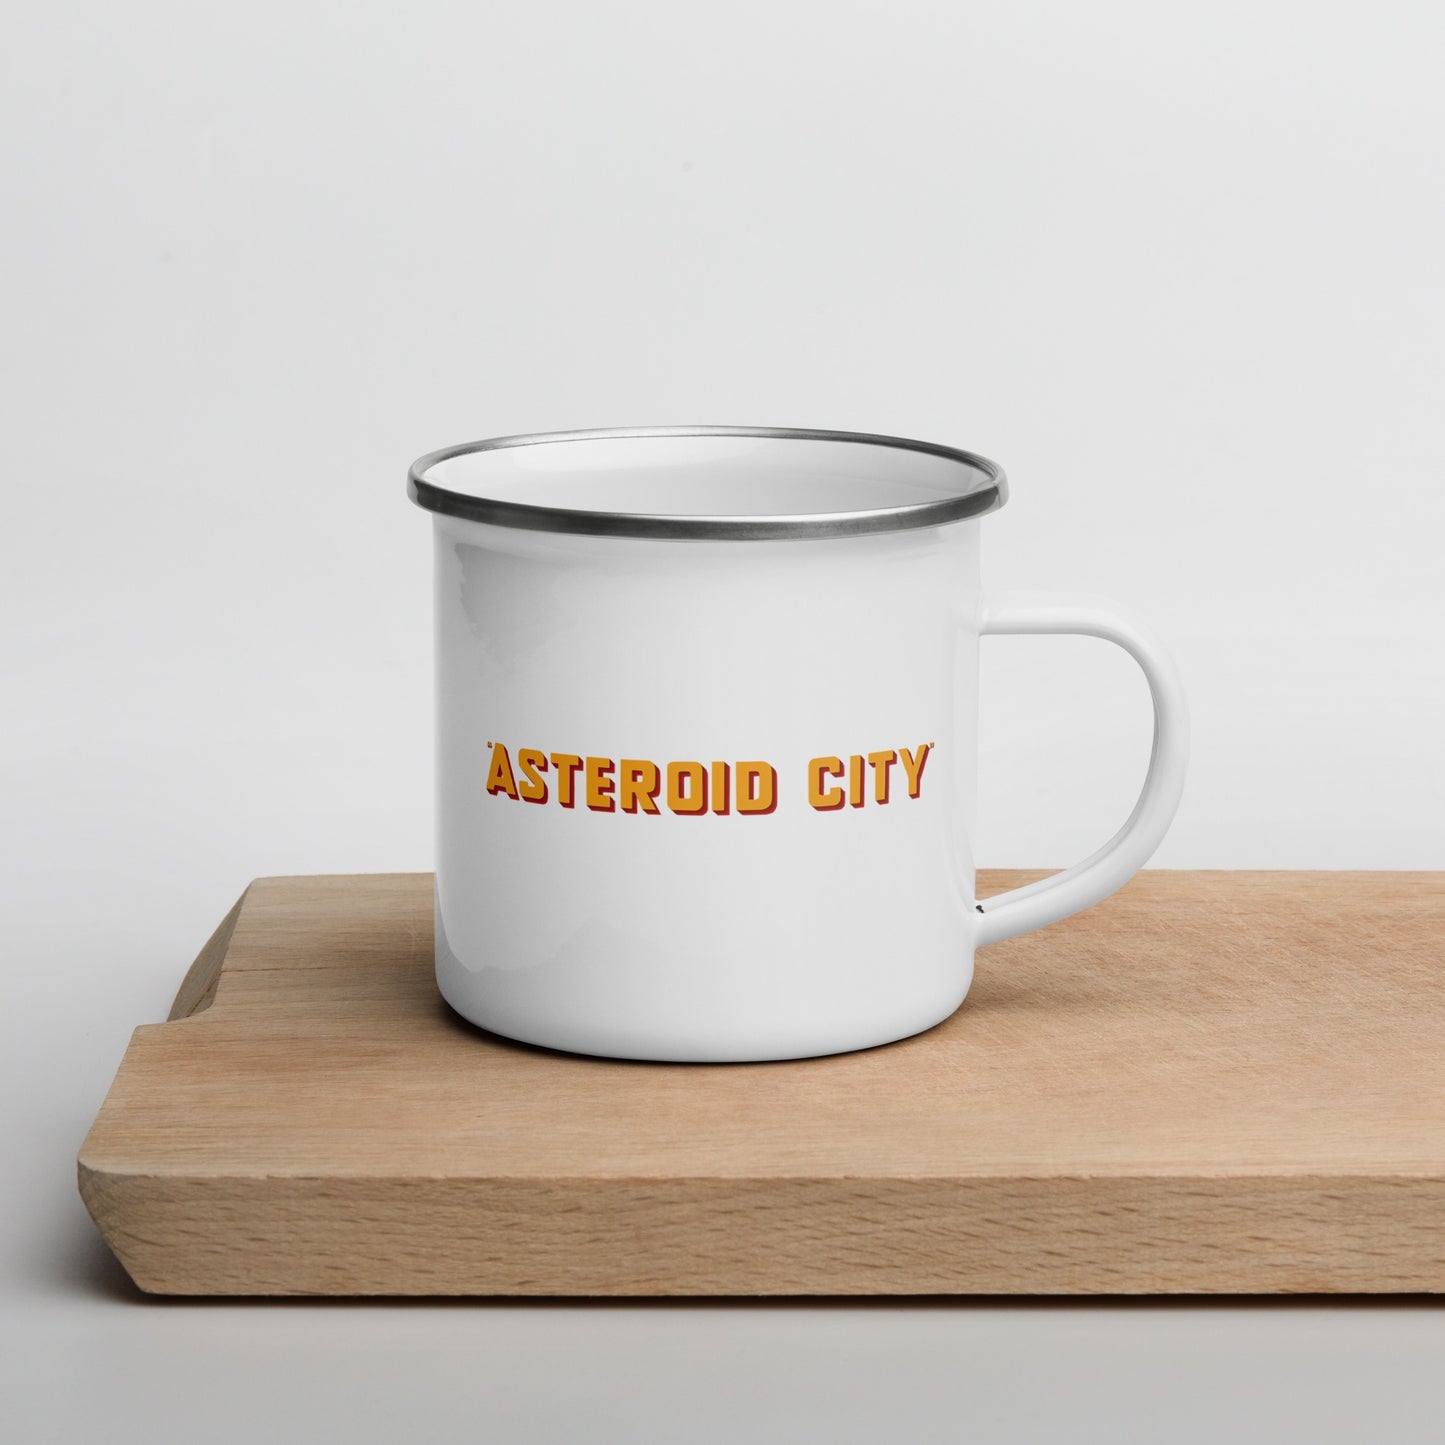 Asteroid City Logo Enamel Mug